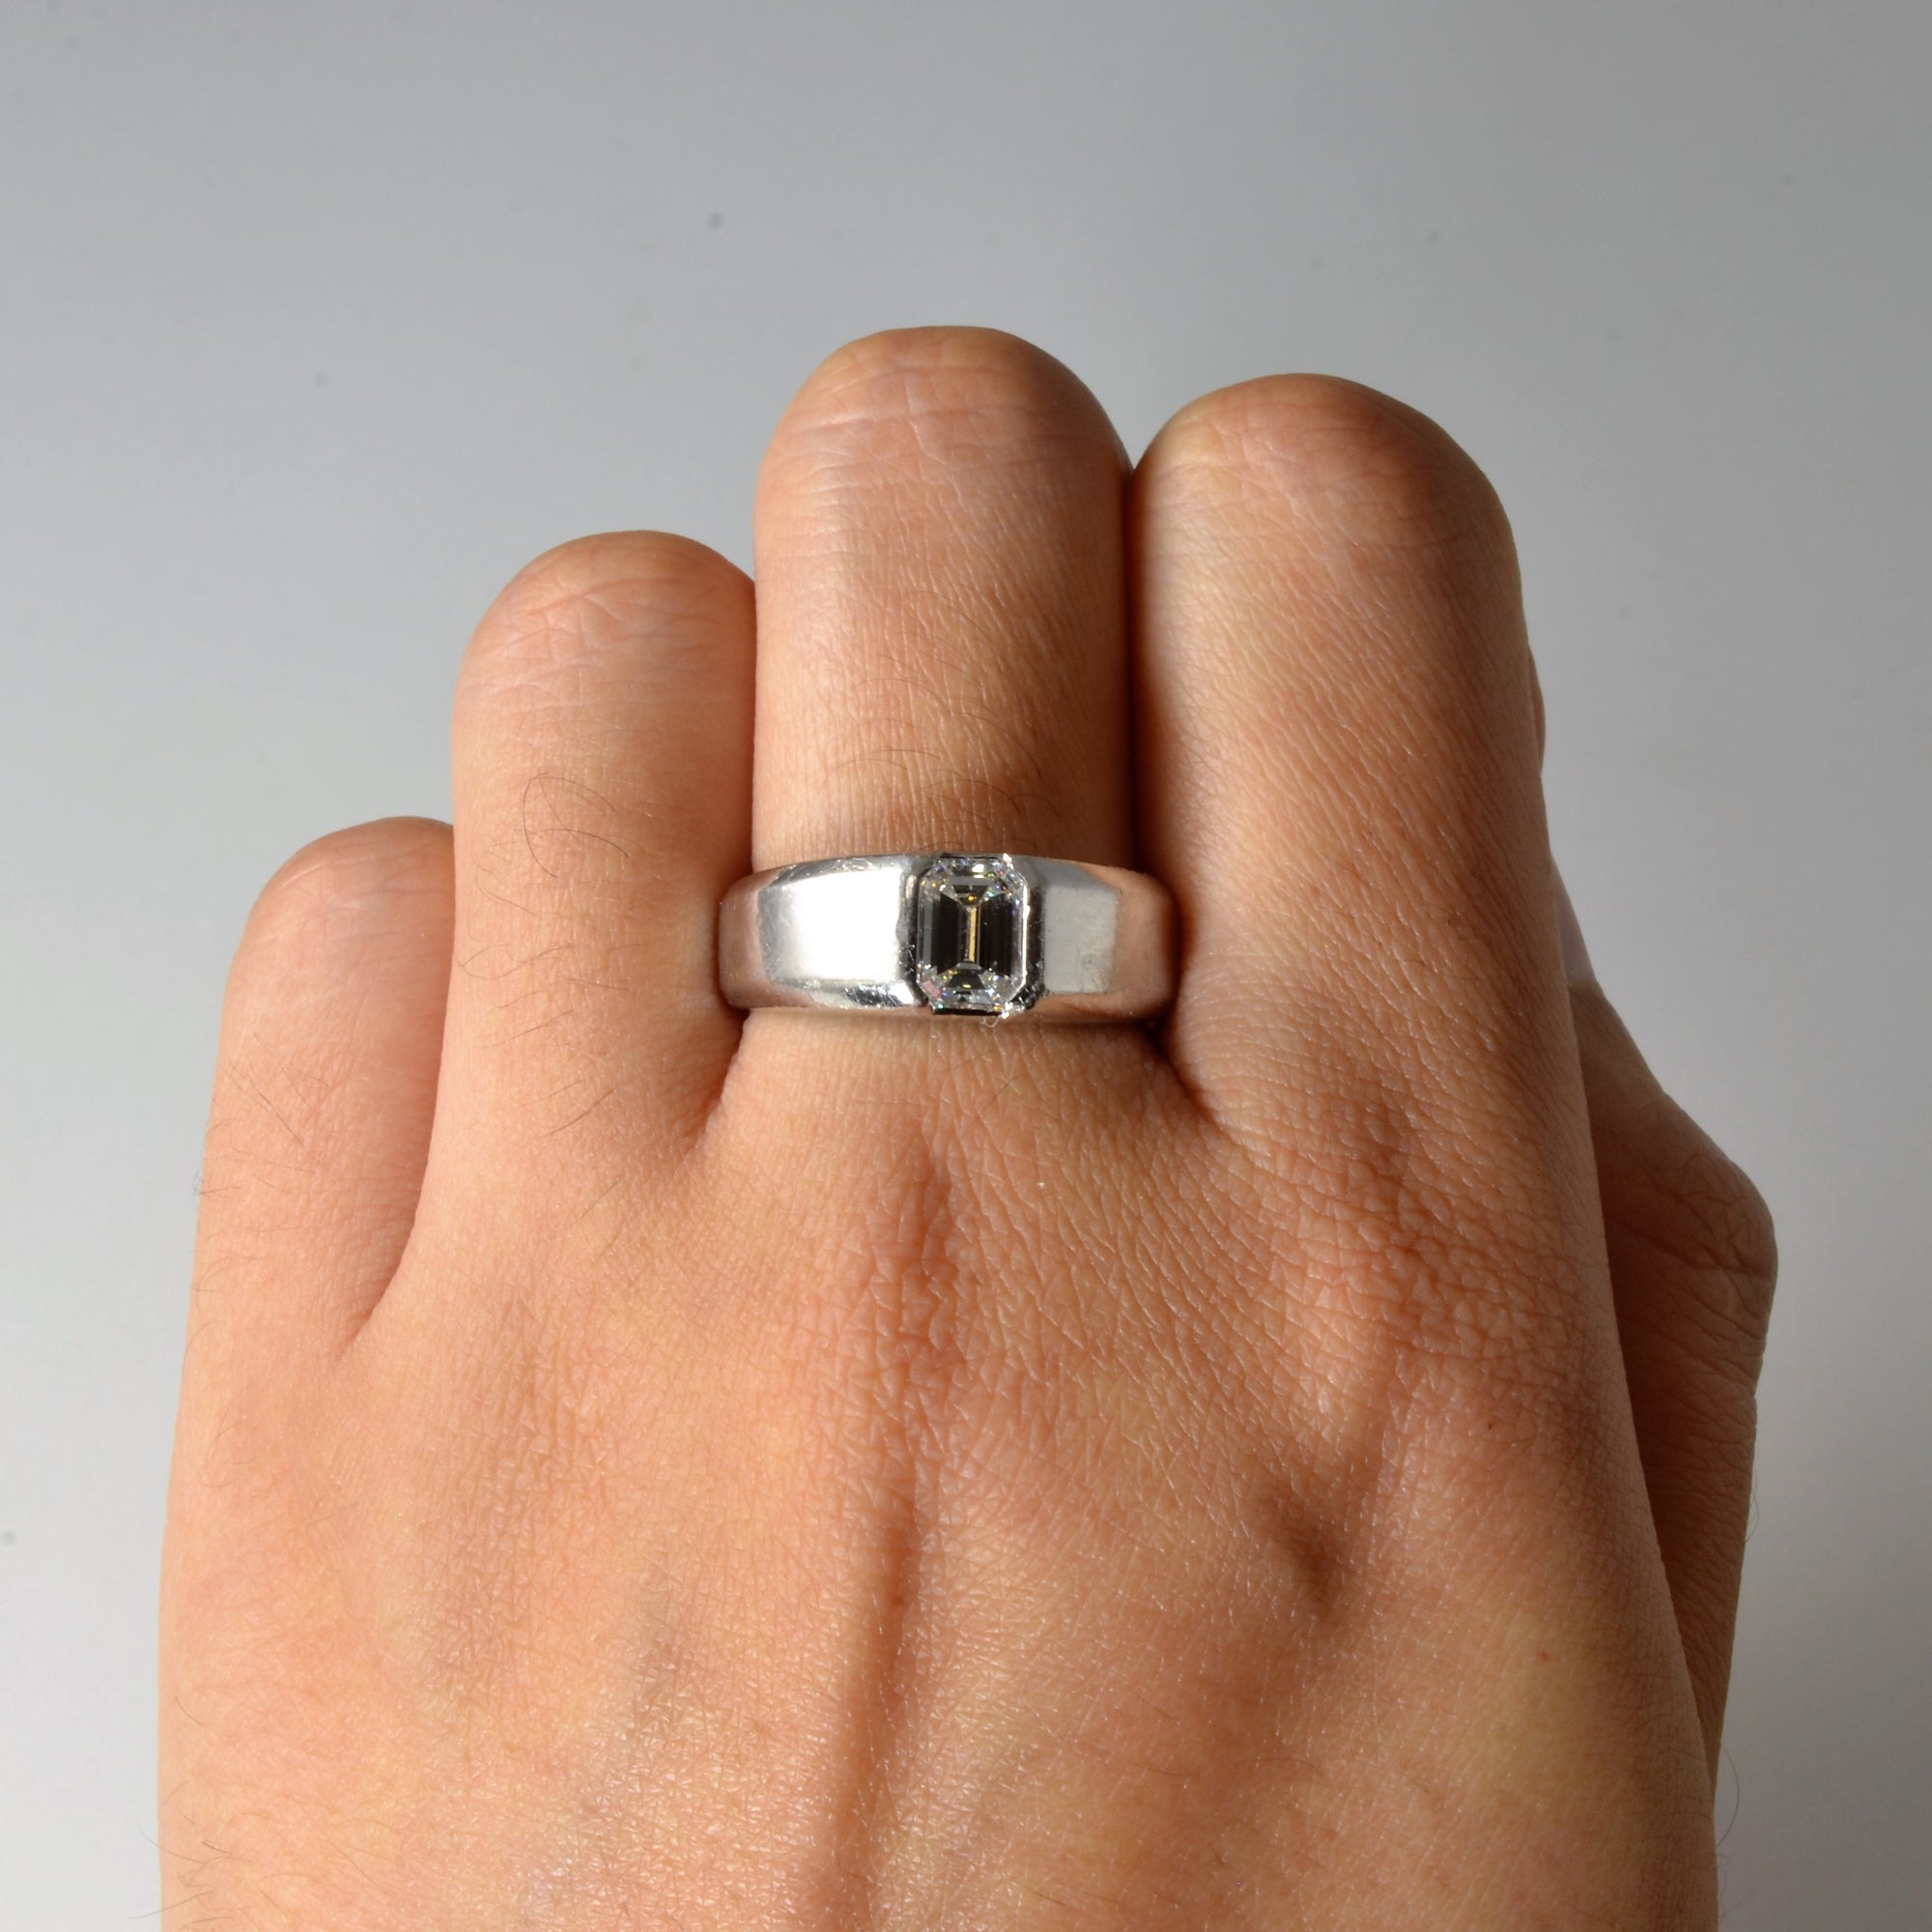 Tapered Bezel Set Emerald Cut Diamond Ring | 1.01ct | SZ 8.25 |